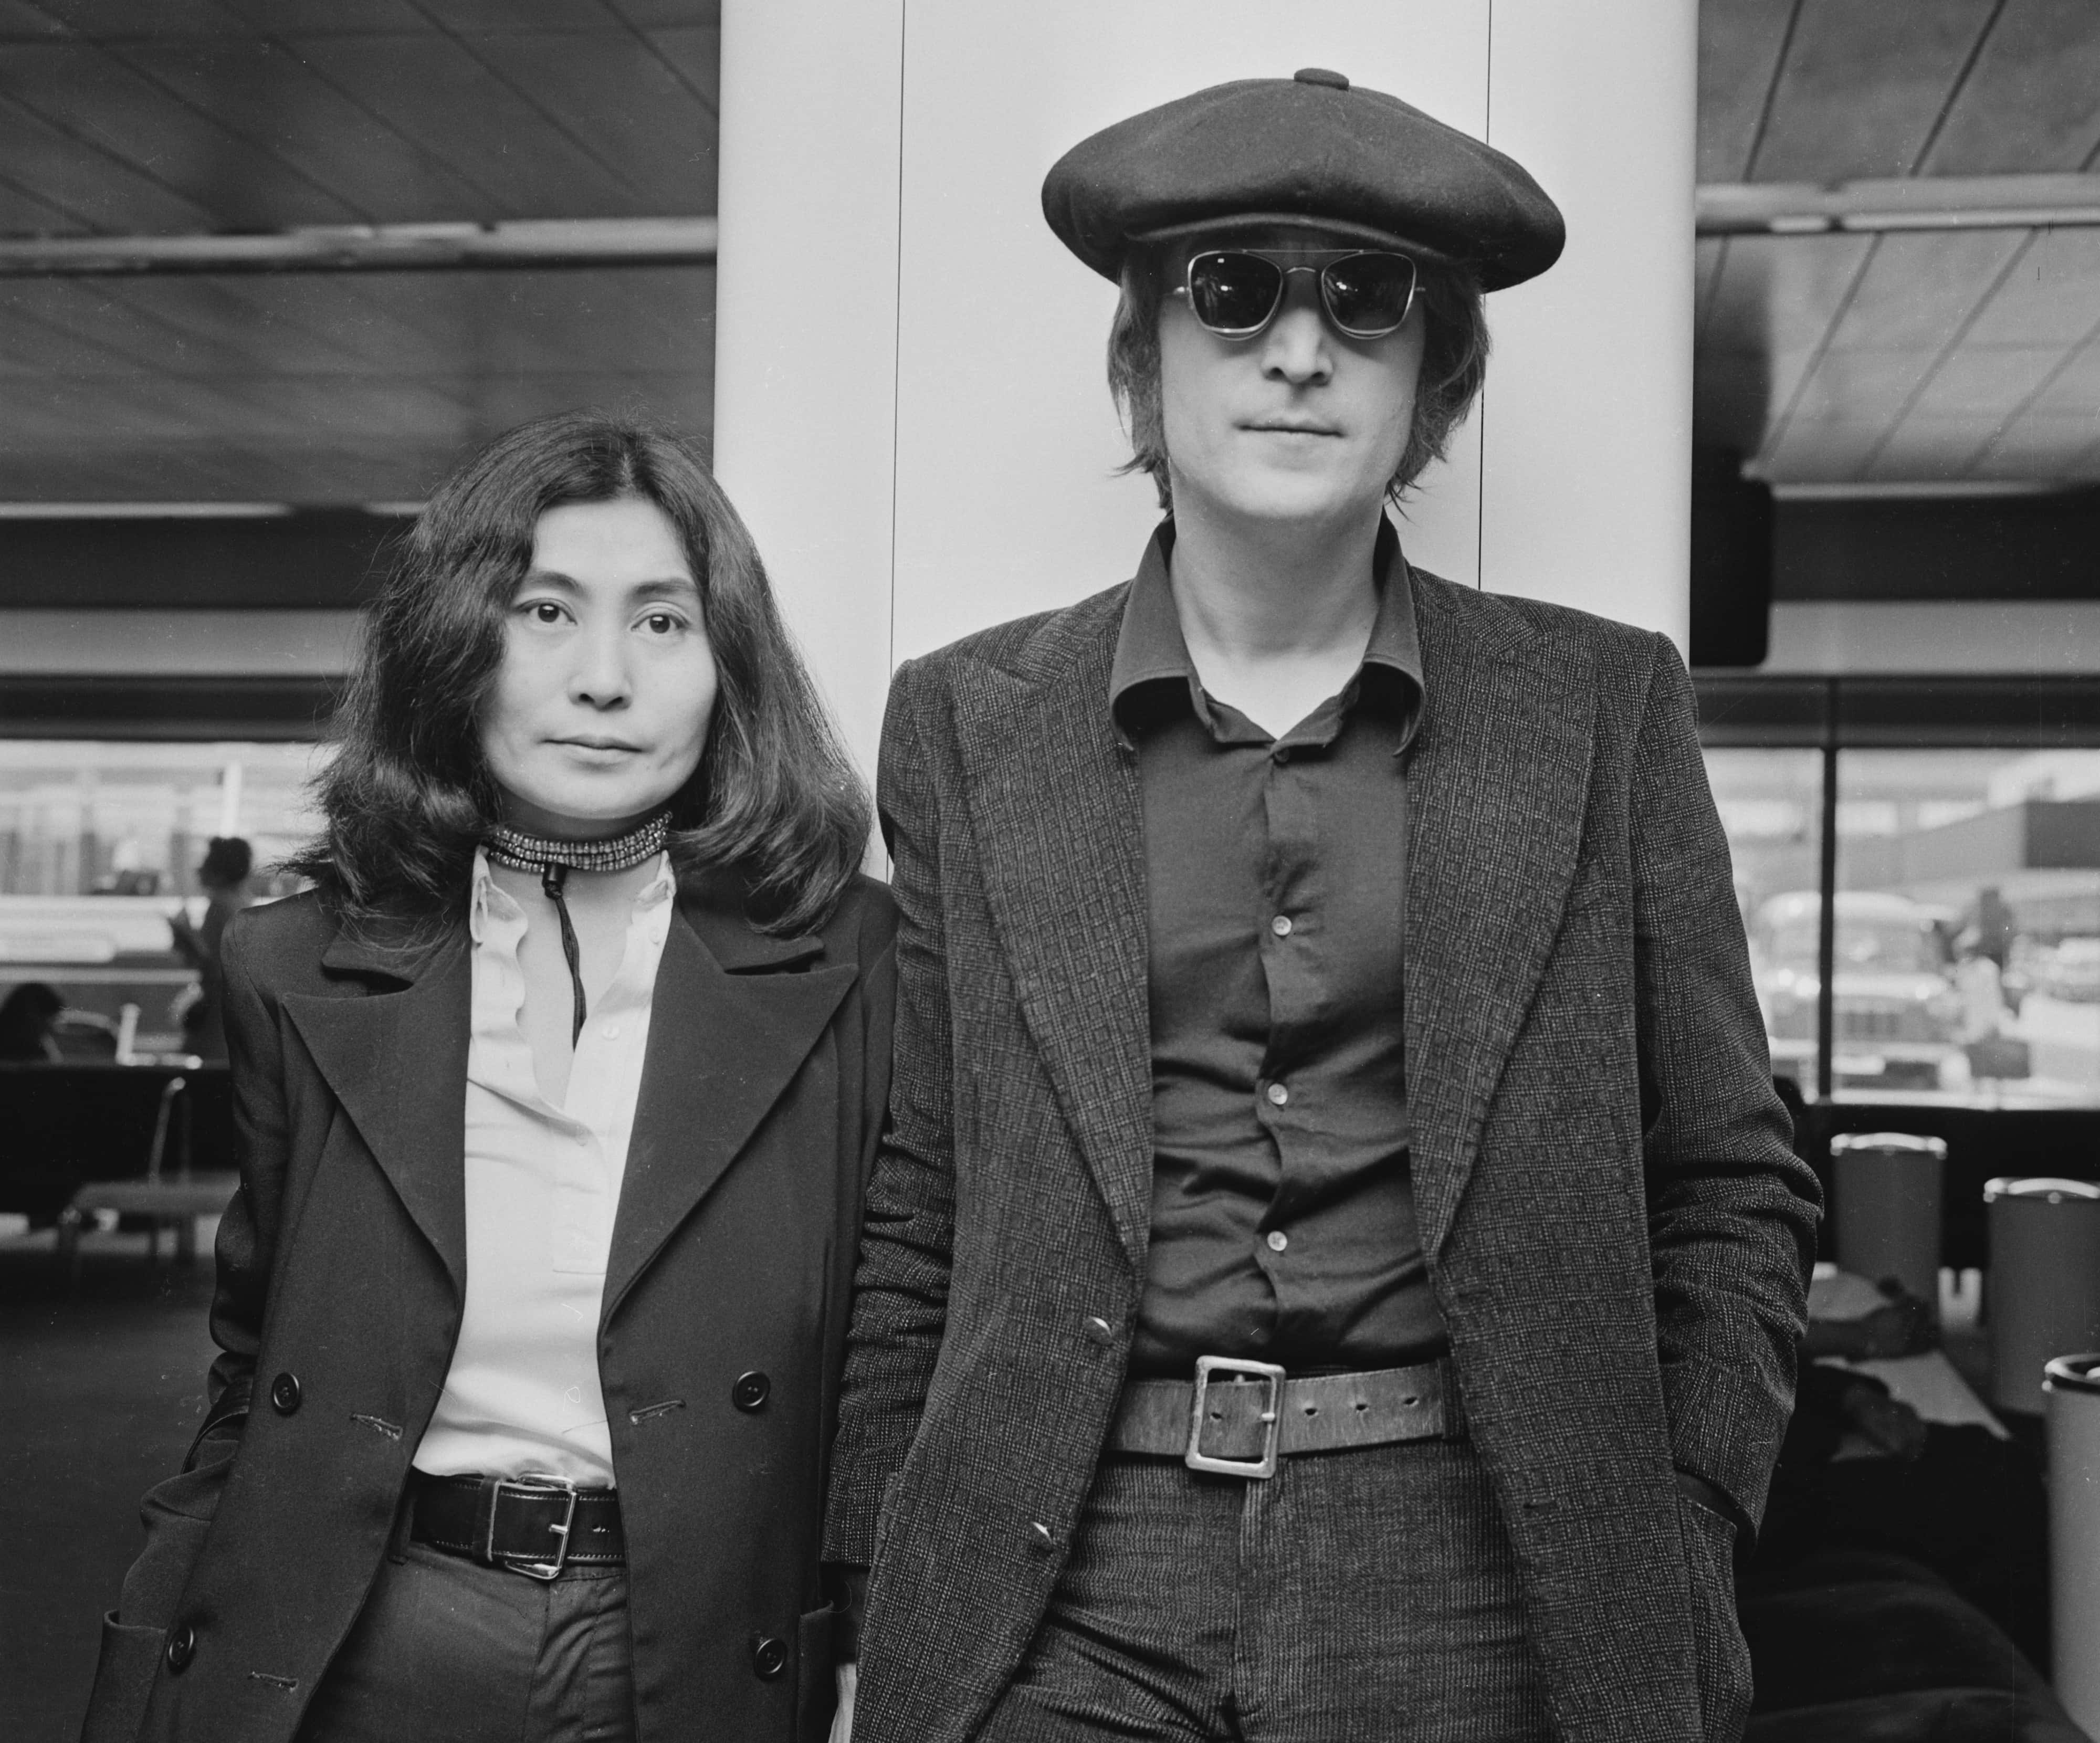 John Lennon Facts